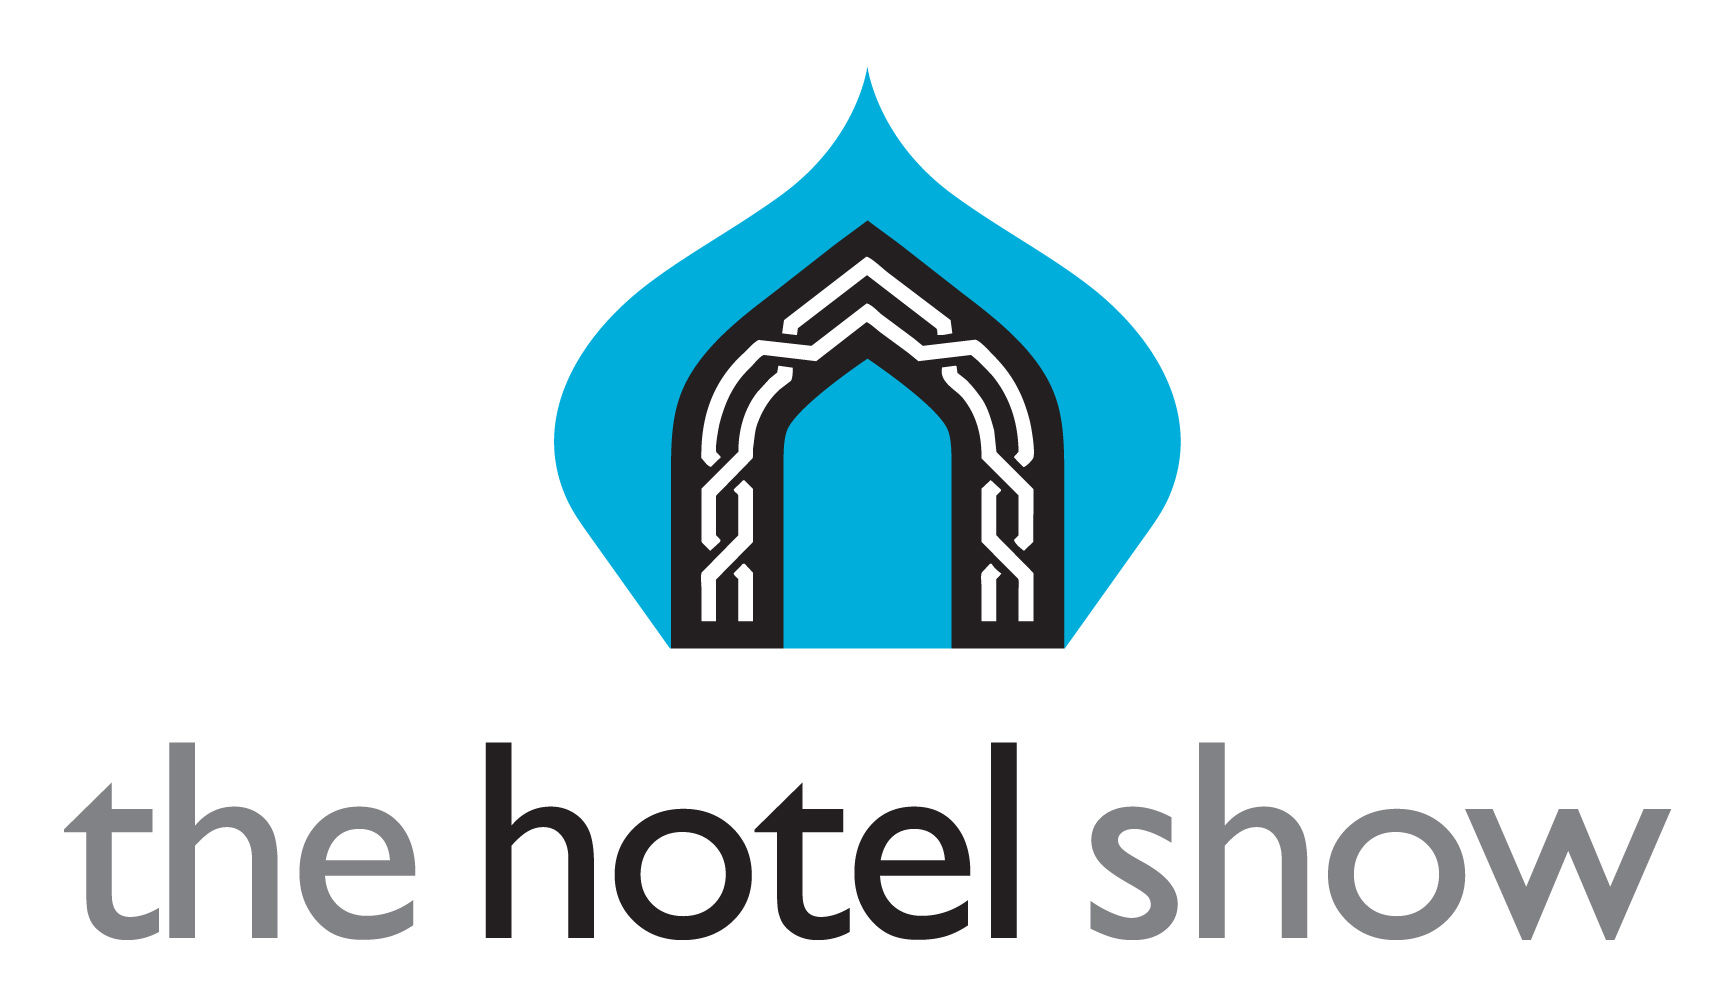 Dubai International Convention and Exhibition Centre (DICEC). Hotel show. Отель Восток логотип. The Dubai International Boat show logo.